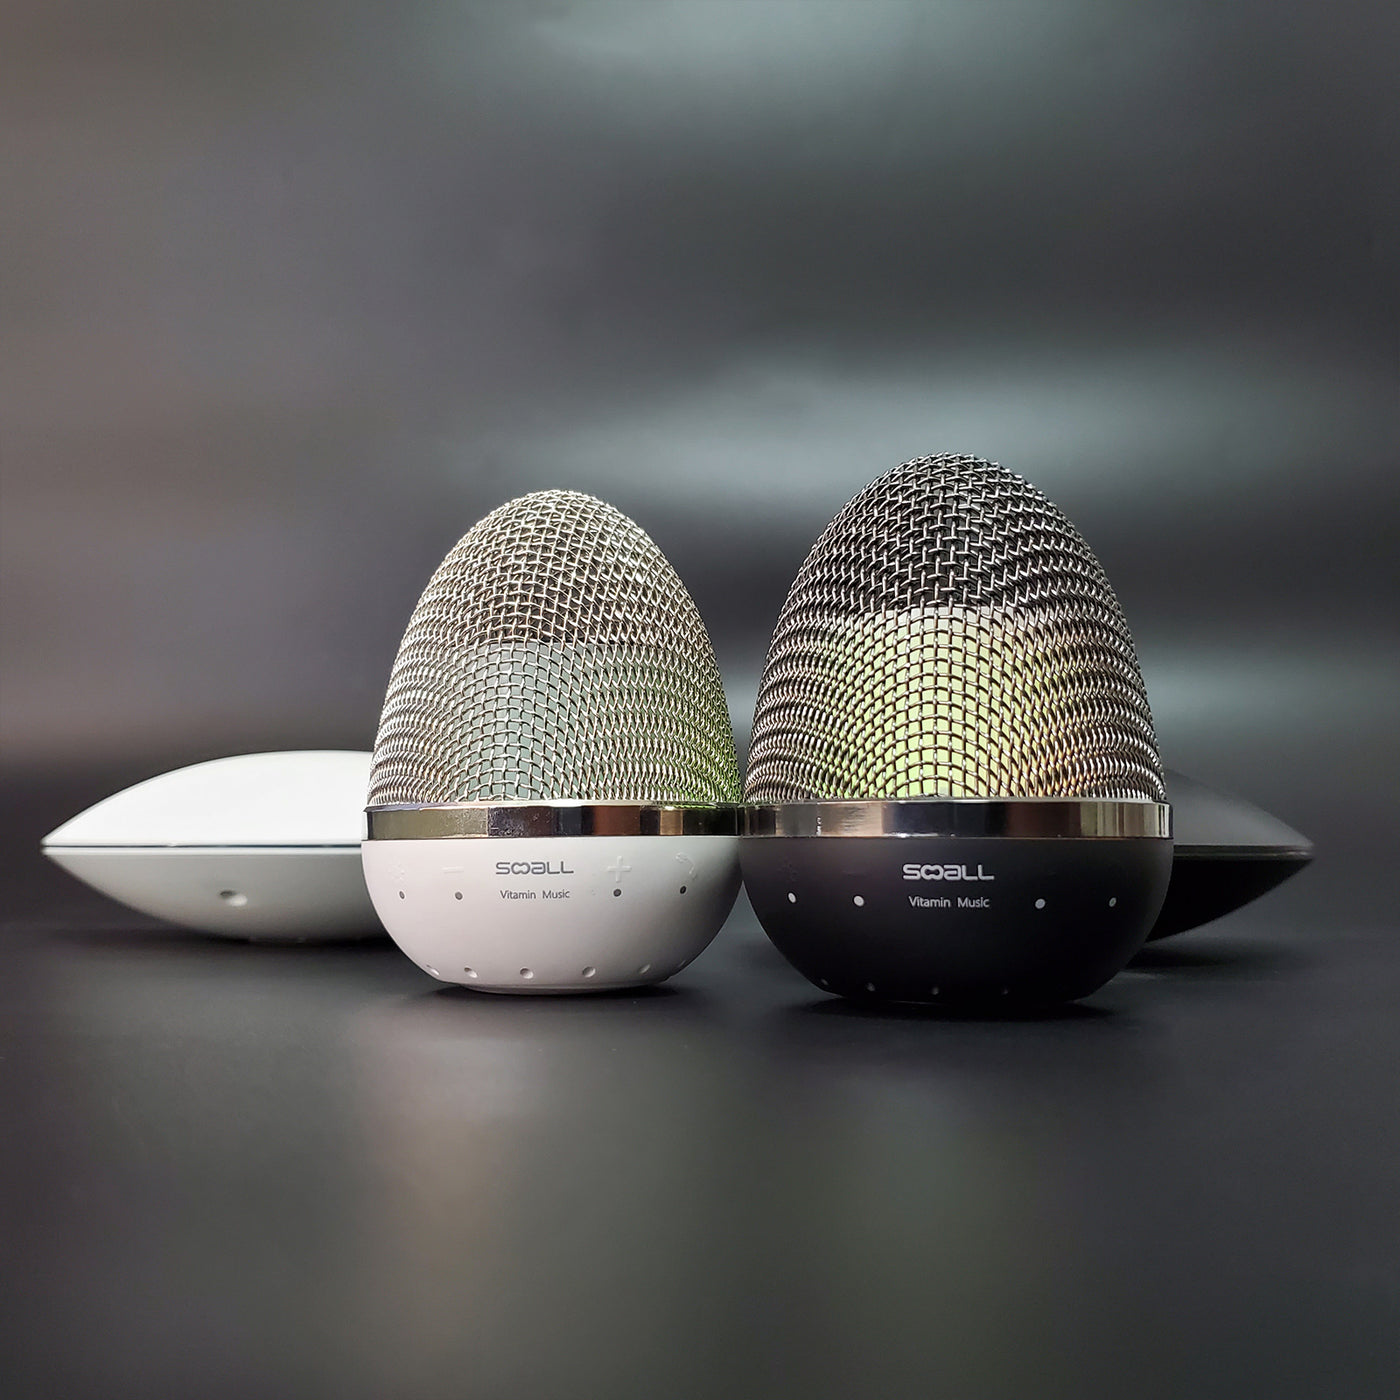 LANGTU magnetic levitation LED light bluetooth wireless floating speaker